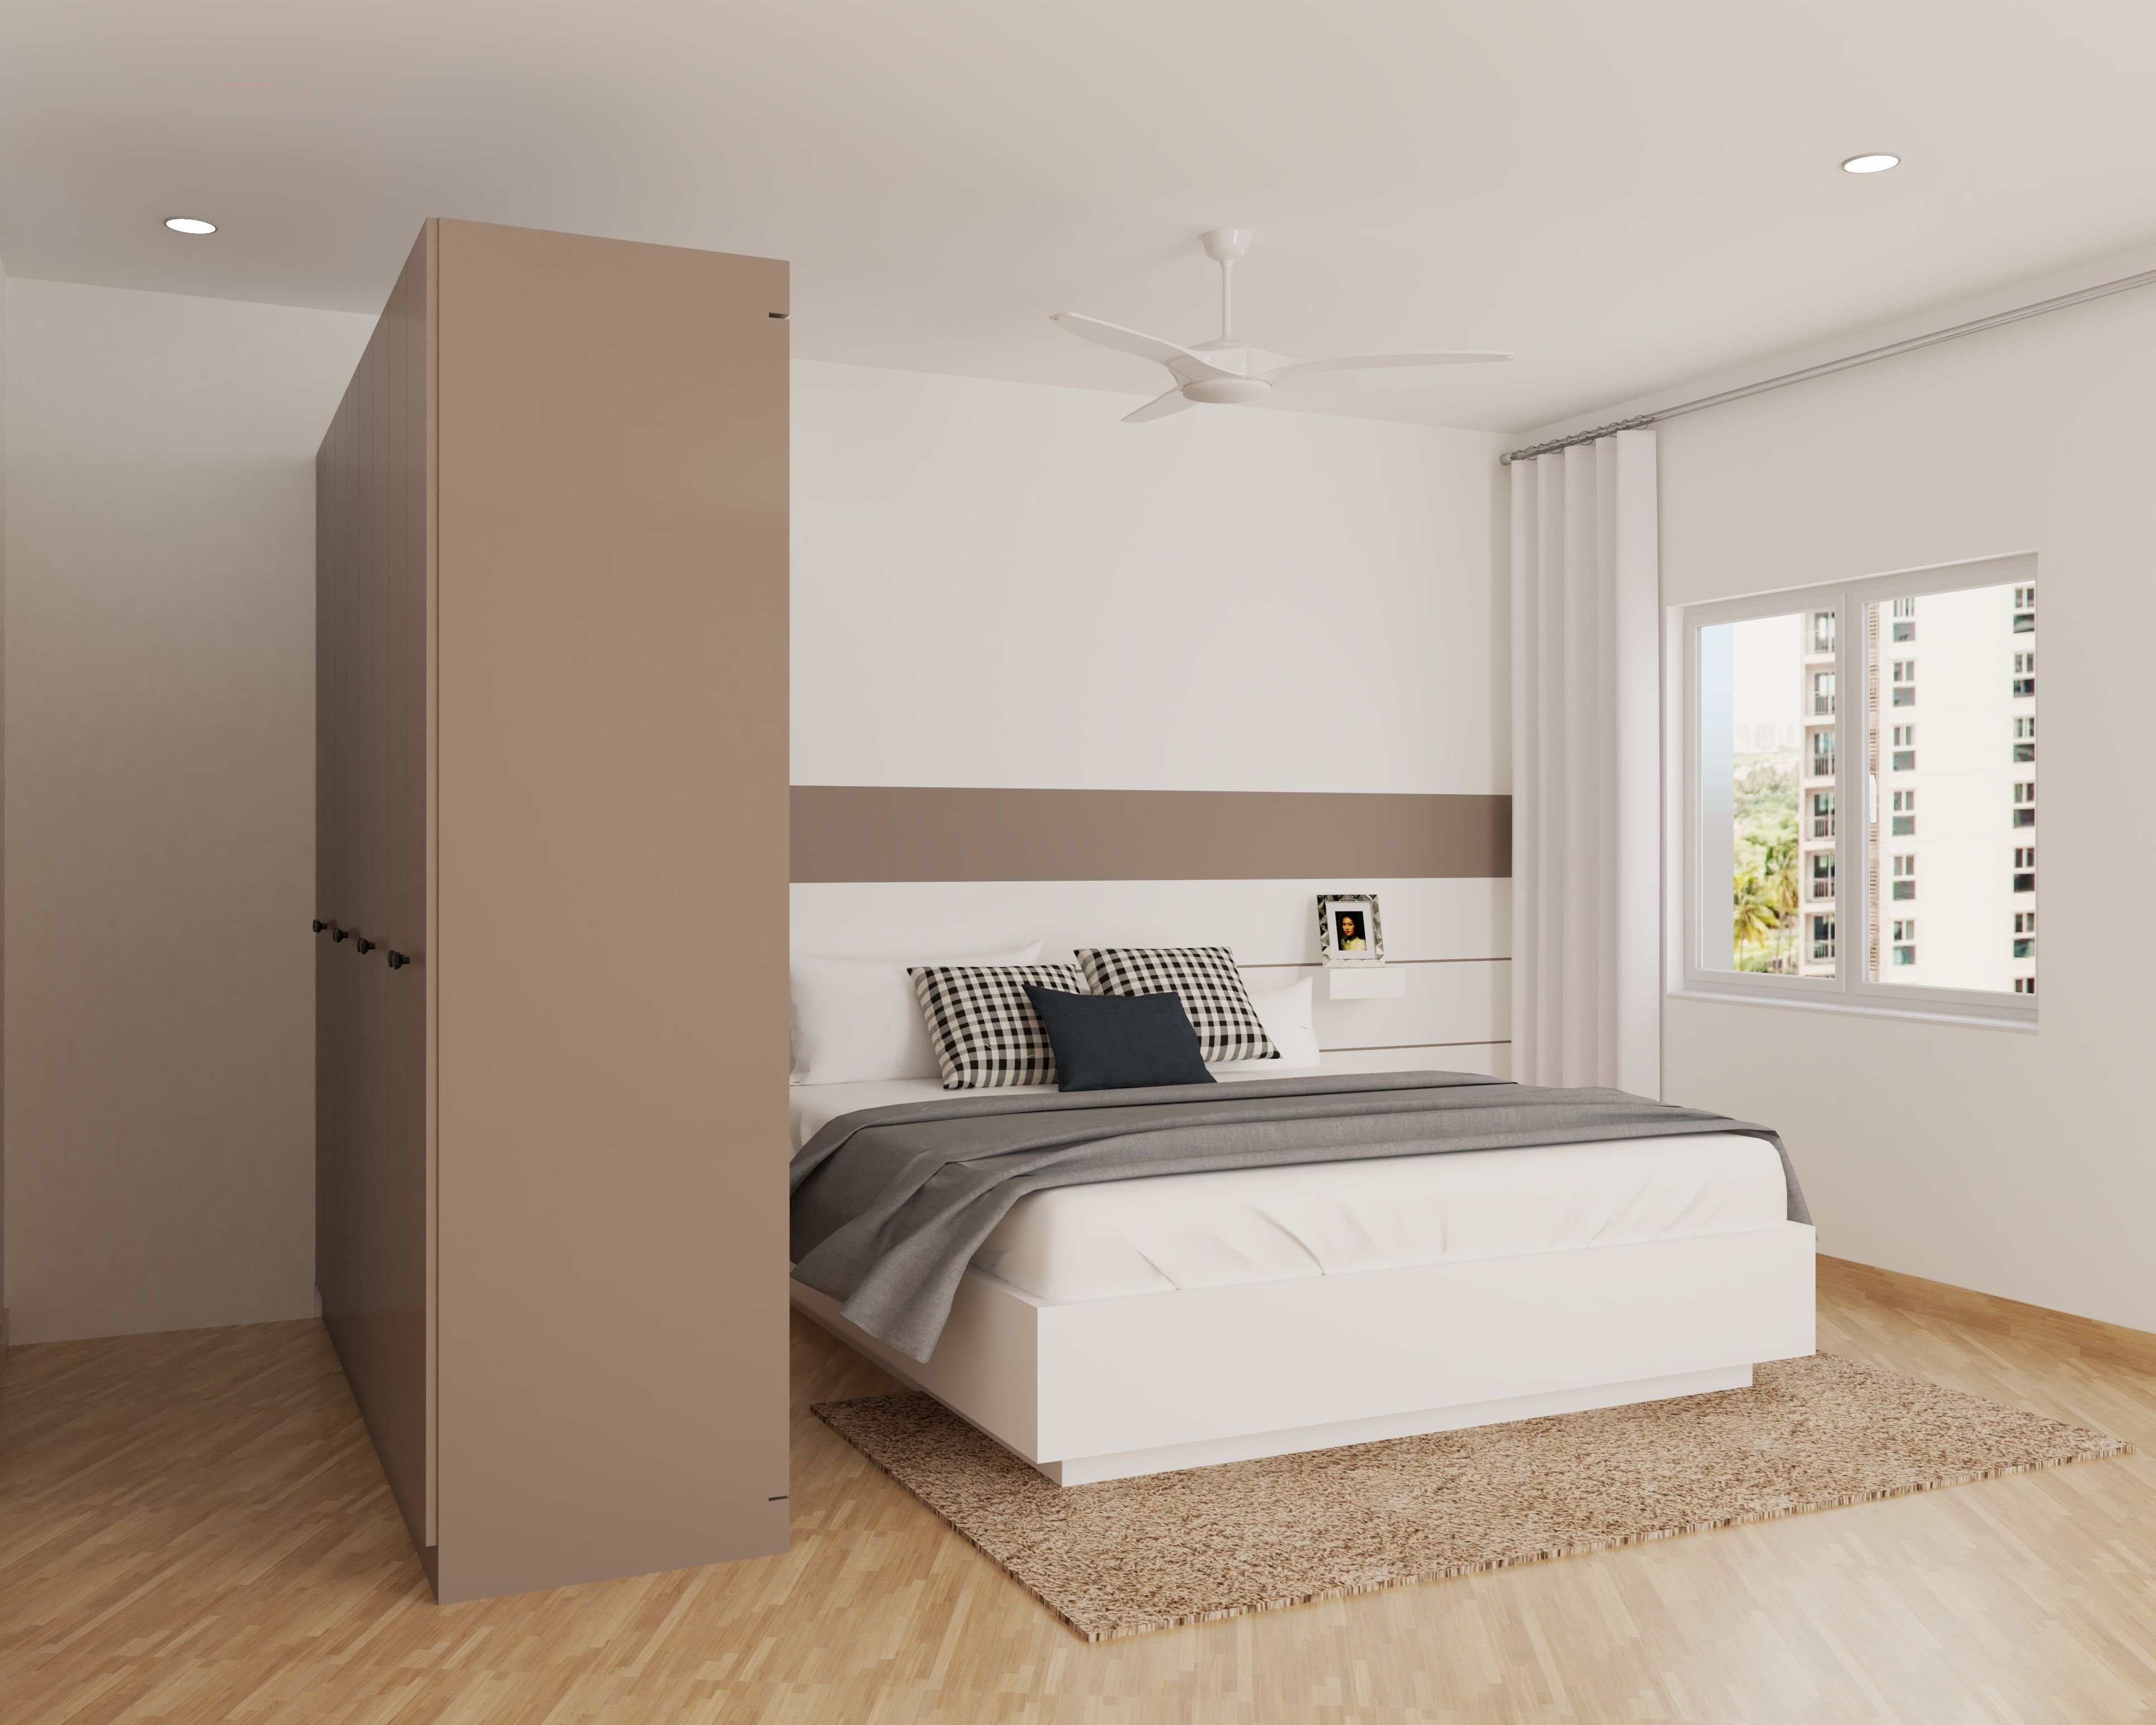 Glossy Wardrobe Partition Master Bedroom Interior Design with Big Window